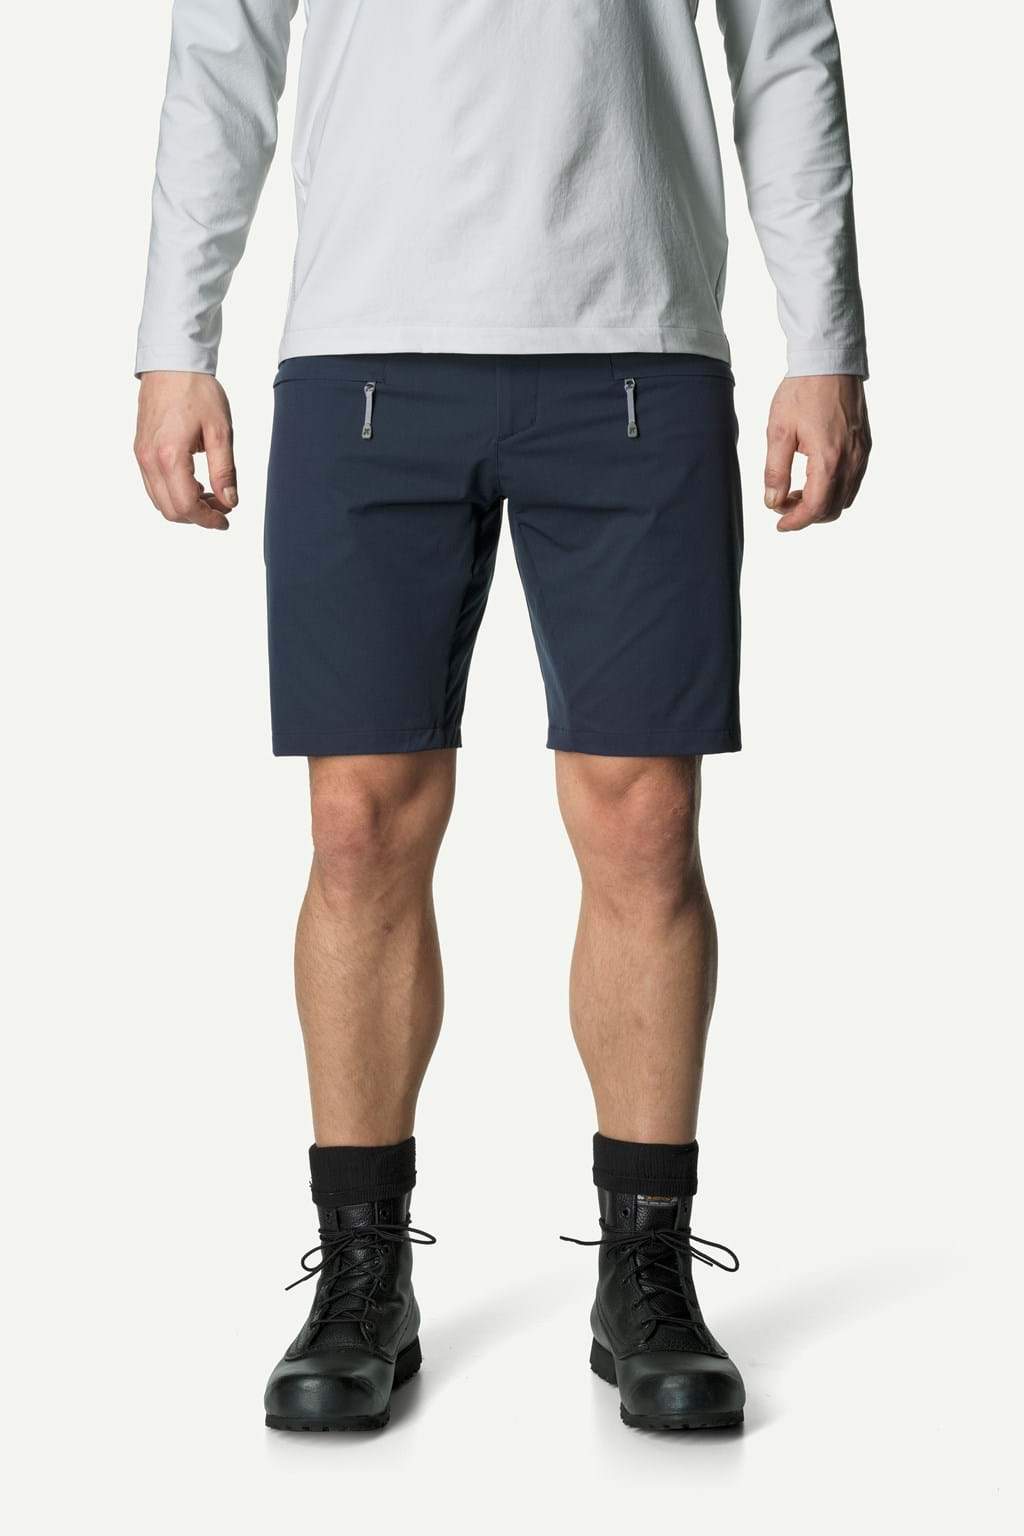 Houdini - M's Daybreak Shorts - Recycled Polyester - Weekendbee - sustainable sportswear